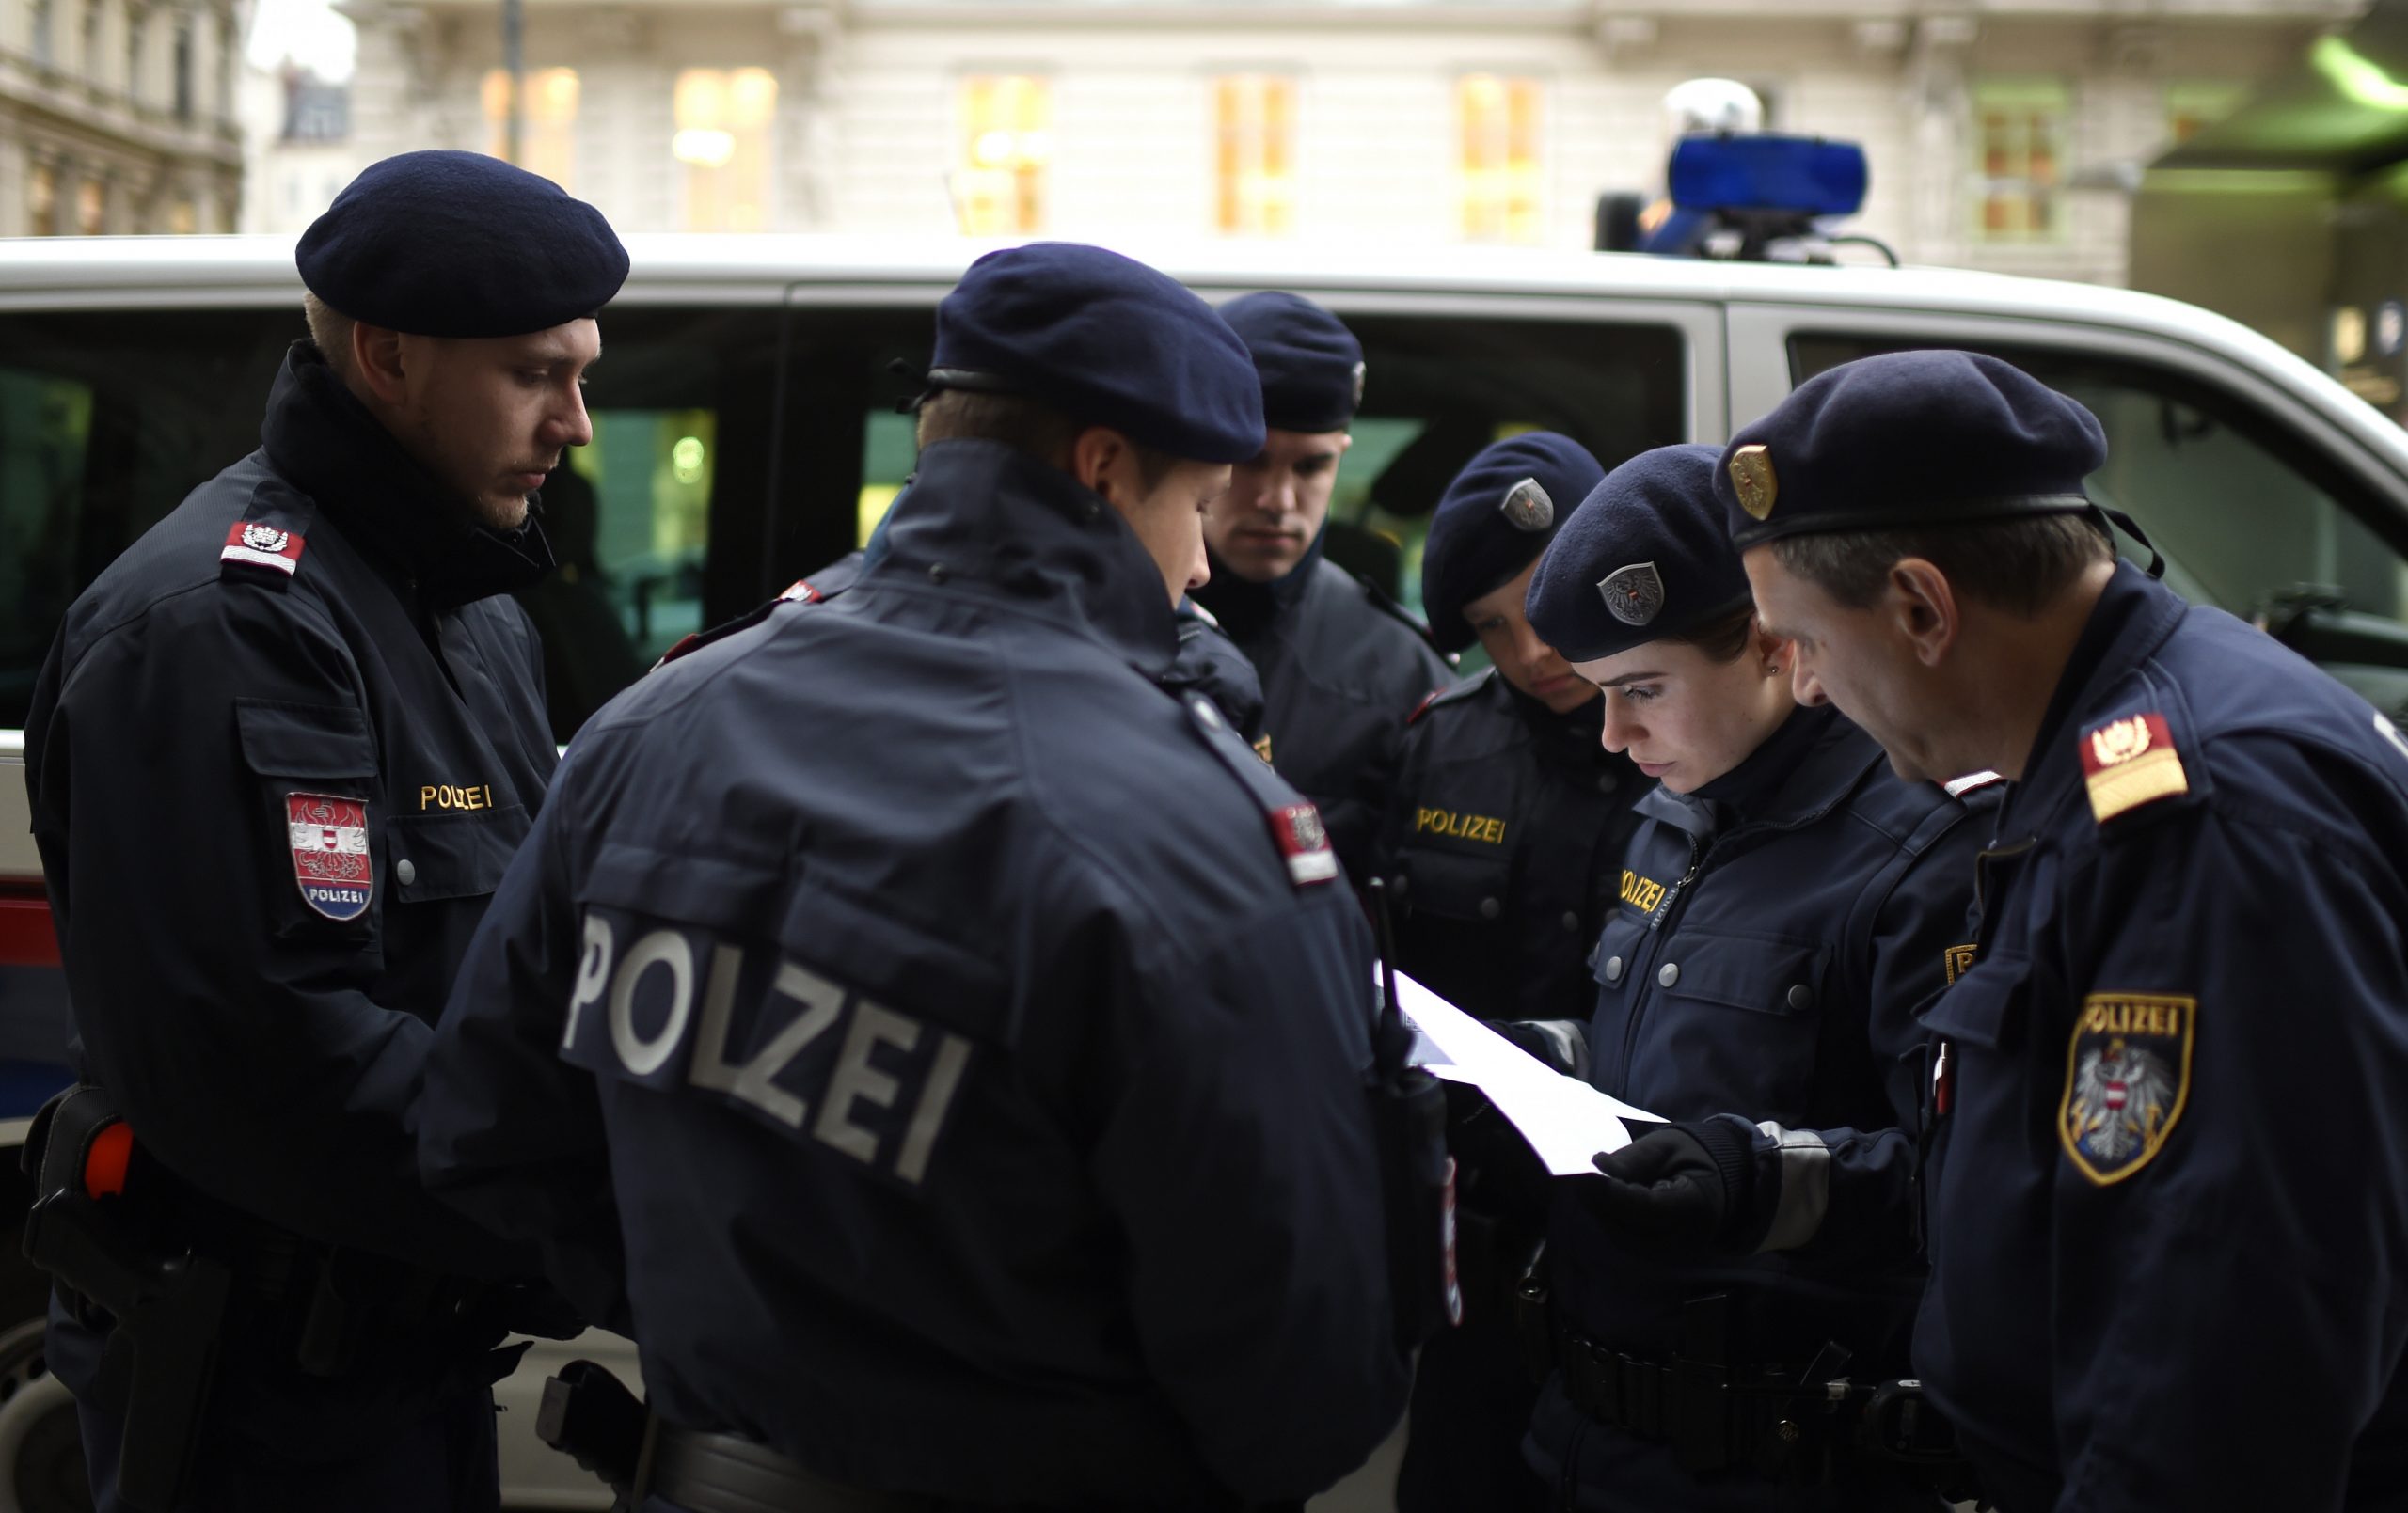 bewaffneter überfall auf trafik in wien-favoriten: hinweise erbeten